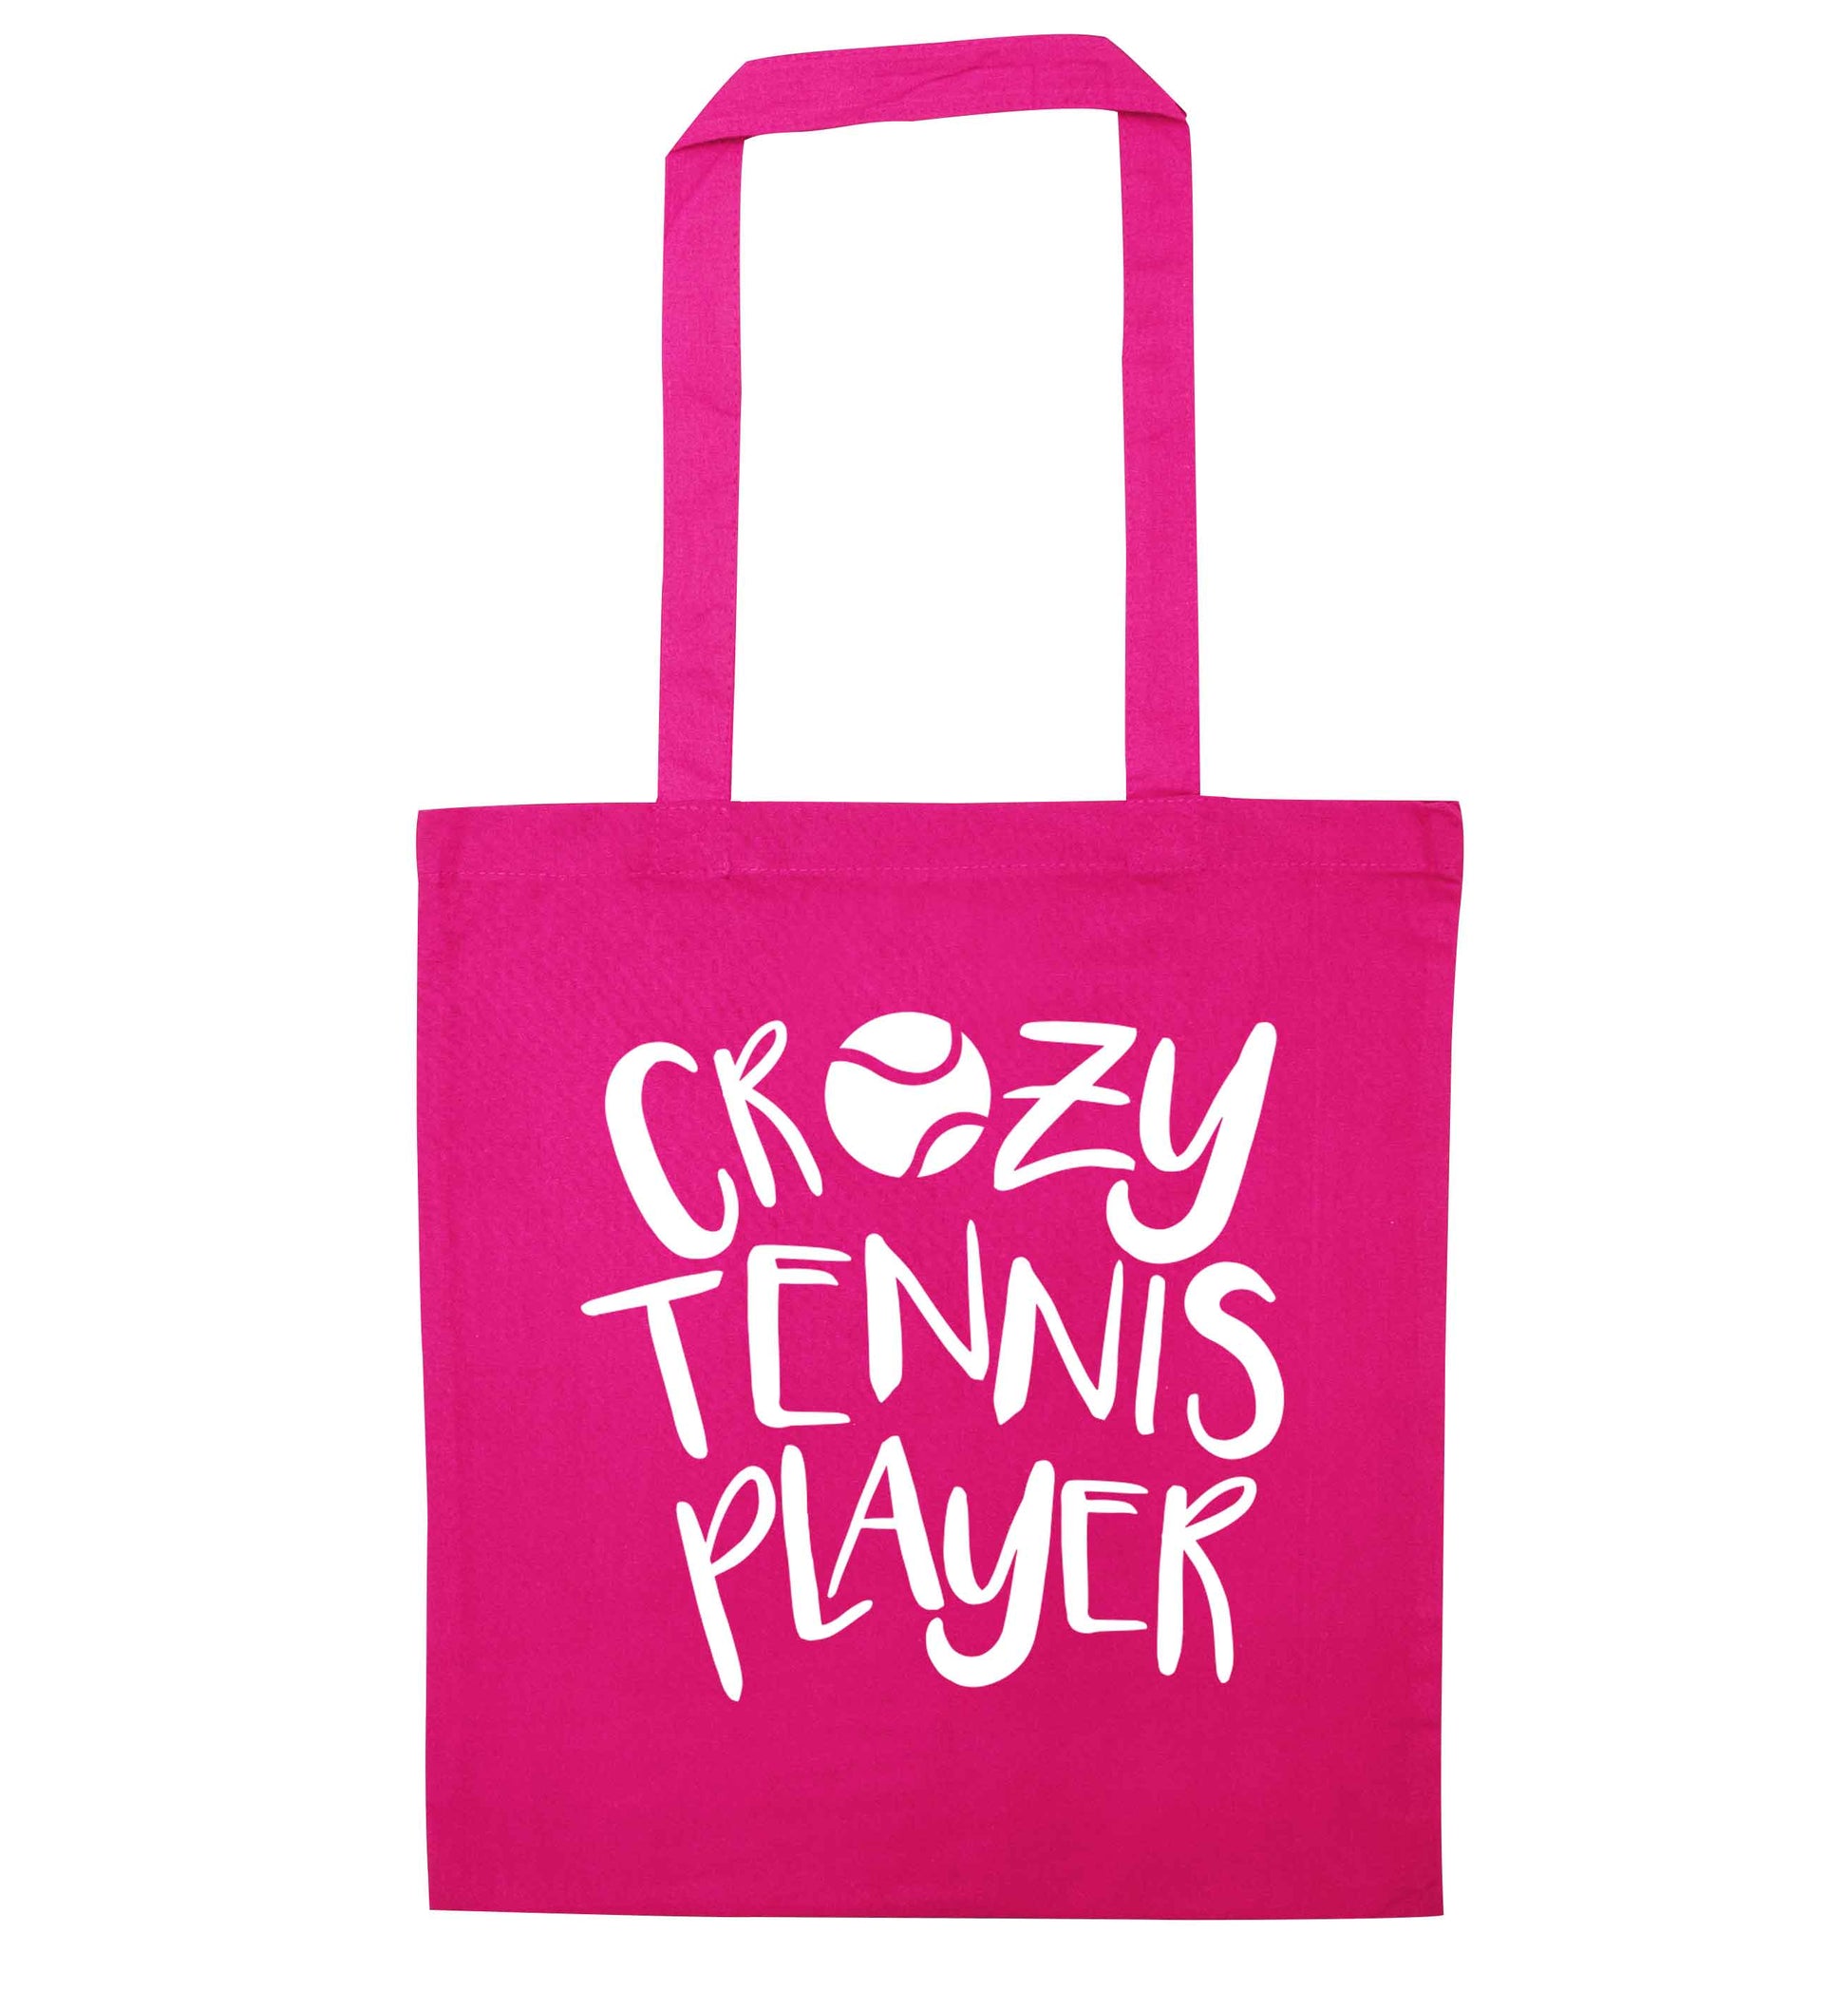 Crazy tennis player pink tote bag